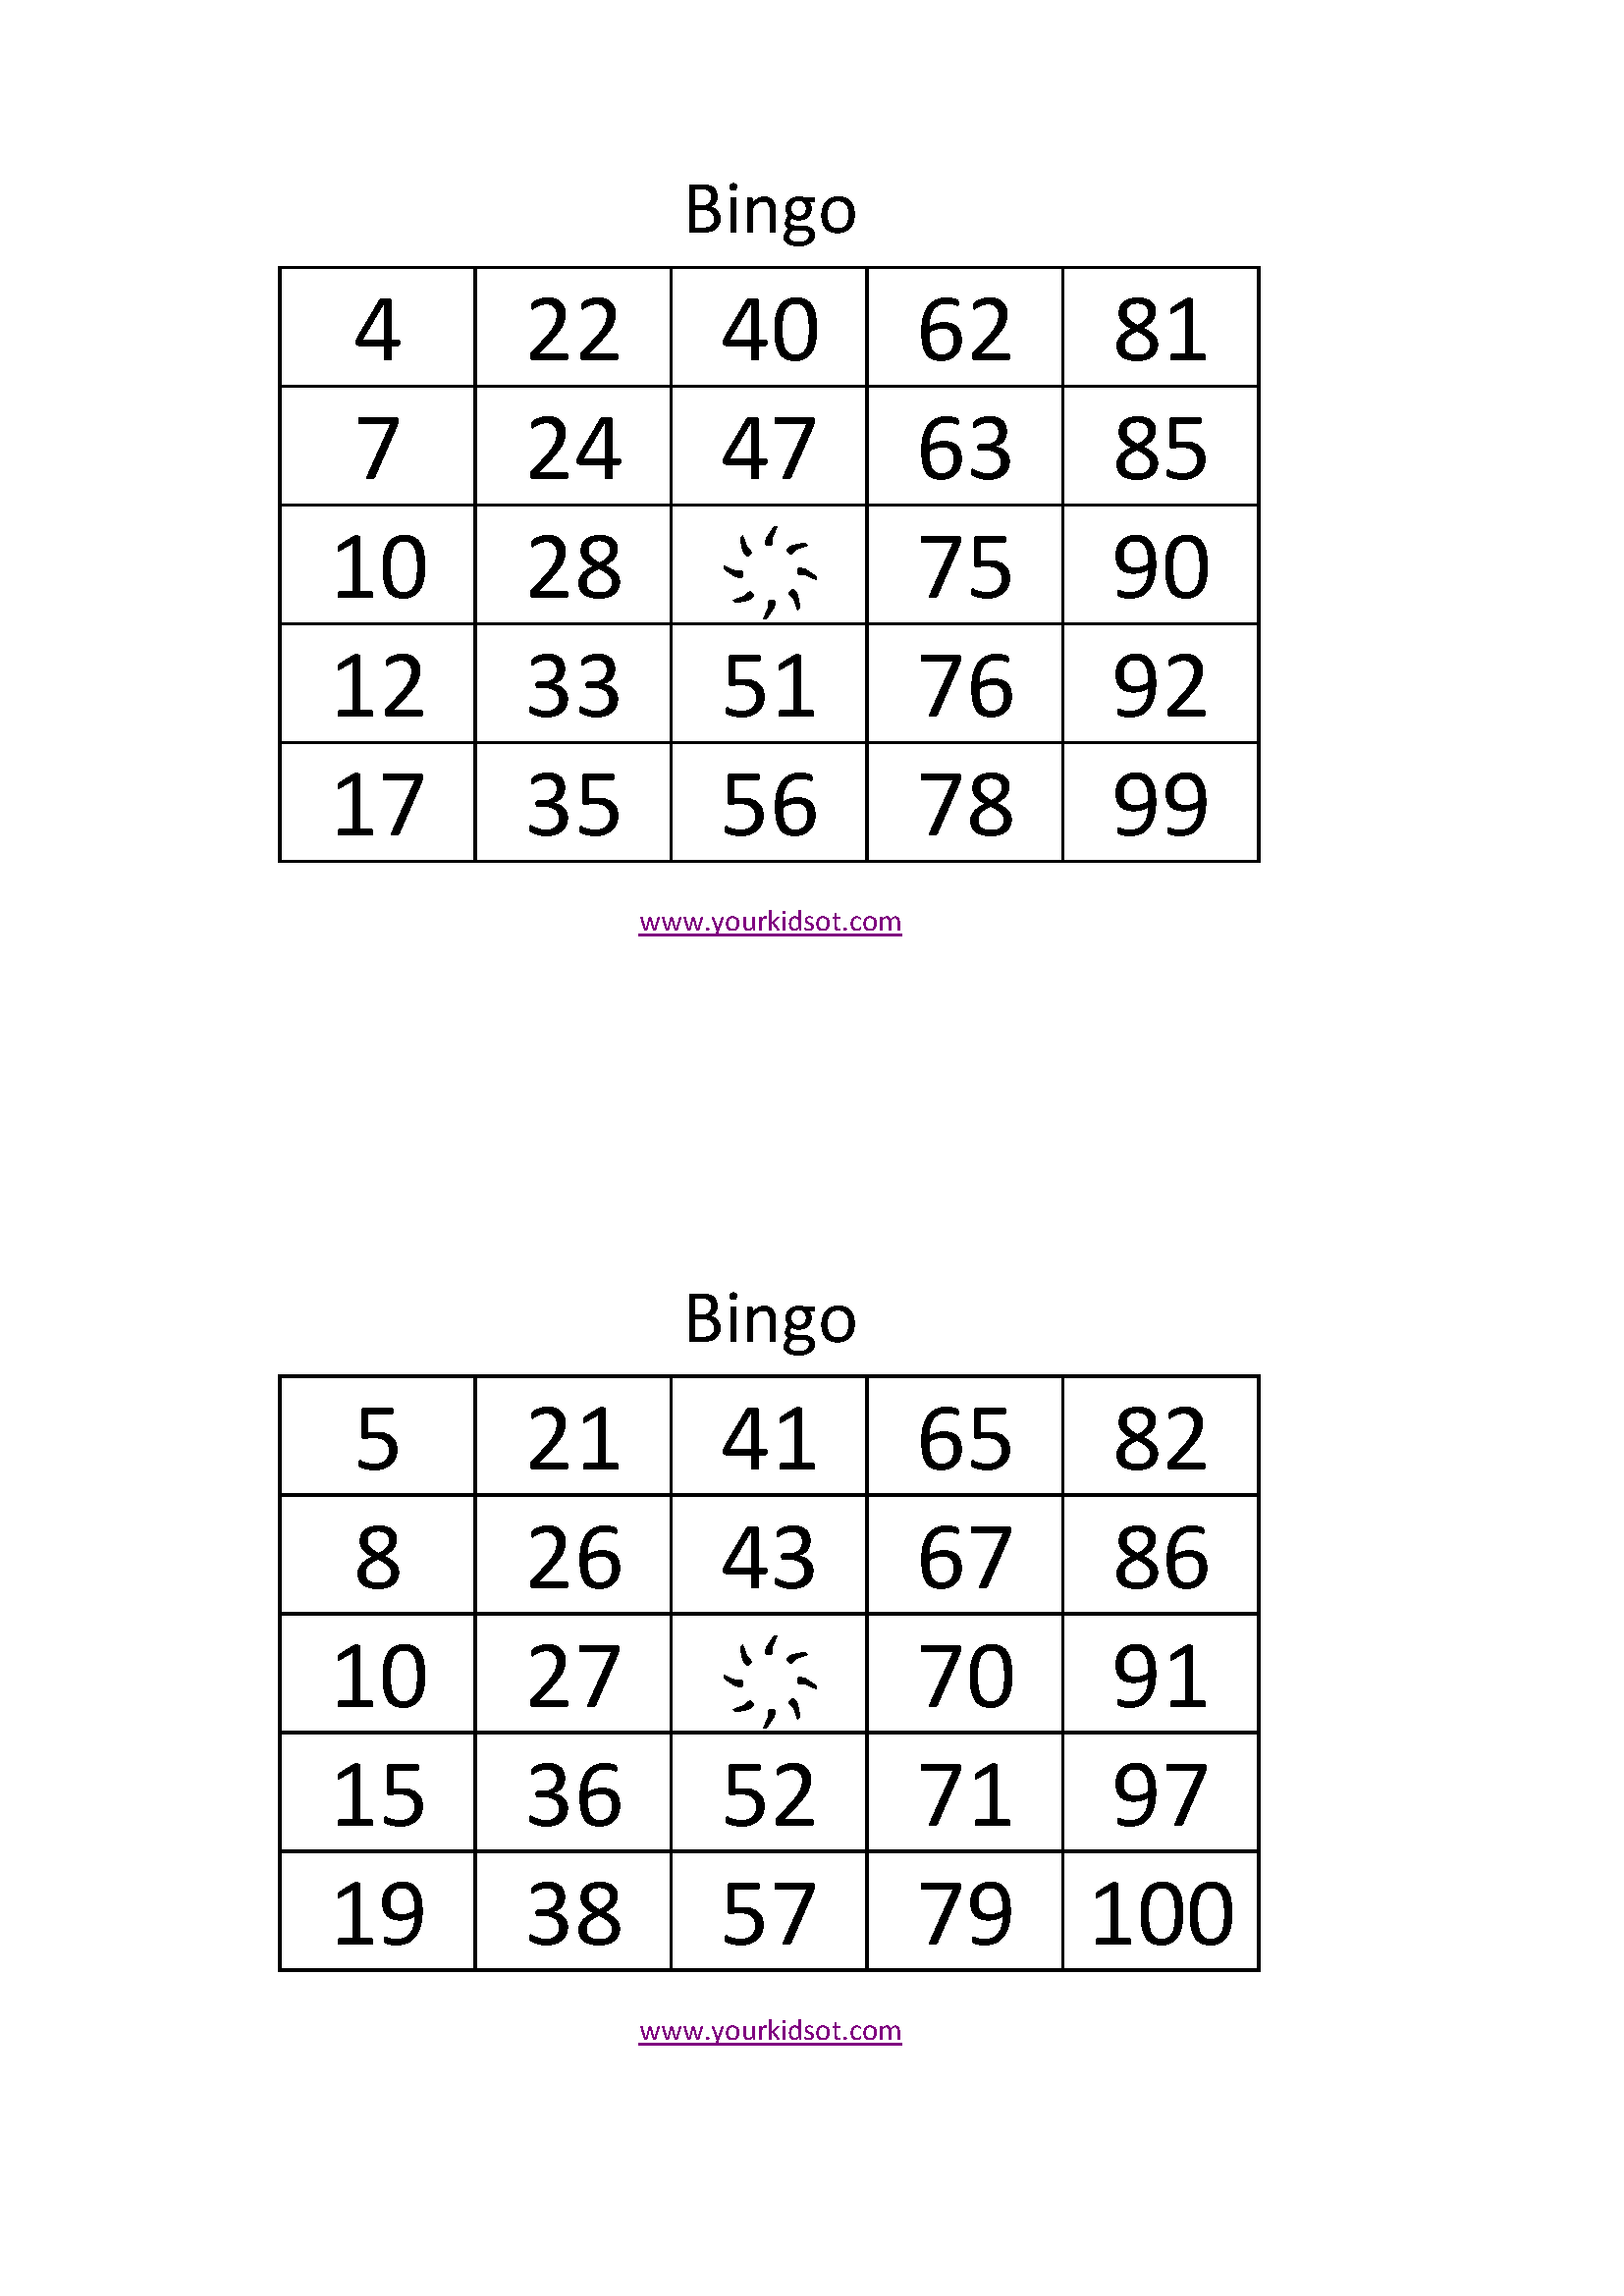 animal-bingo-word-wall-cards-unique-cards-phonics-activities